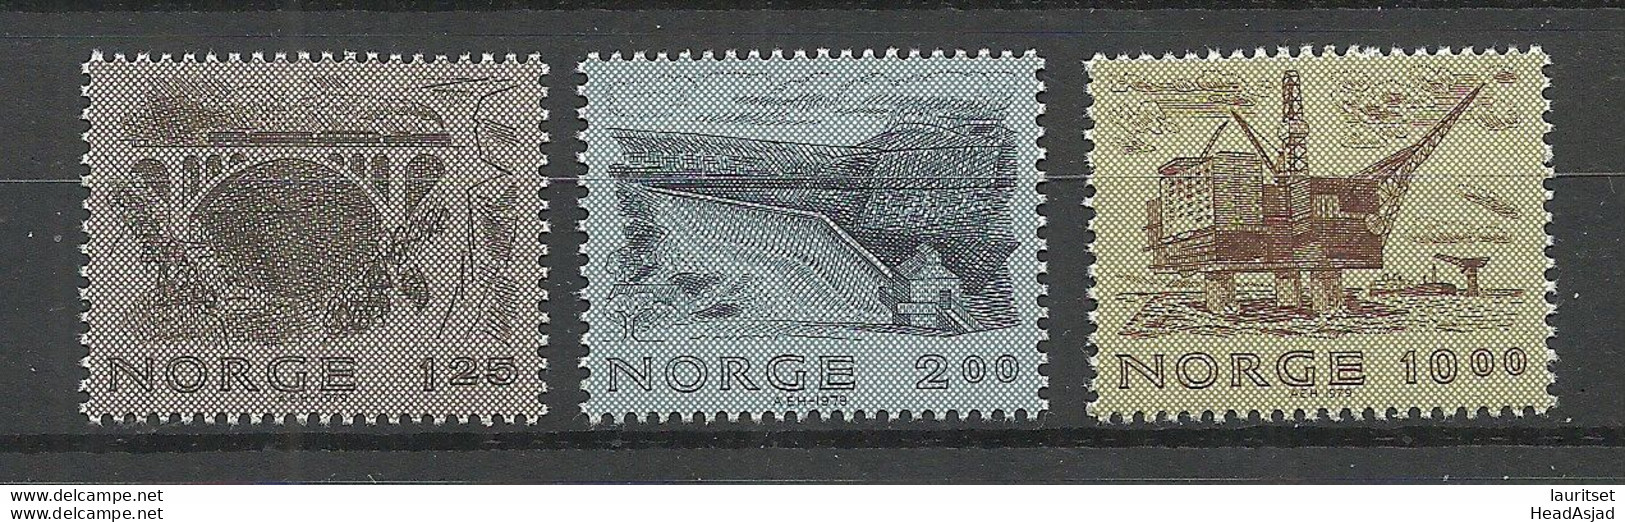 NORWAY 1979 Michel 803 - 805 MNH - Unused Stamps